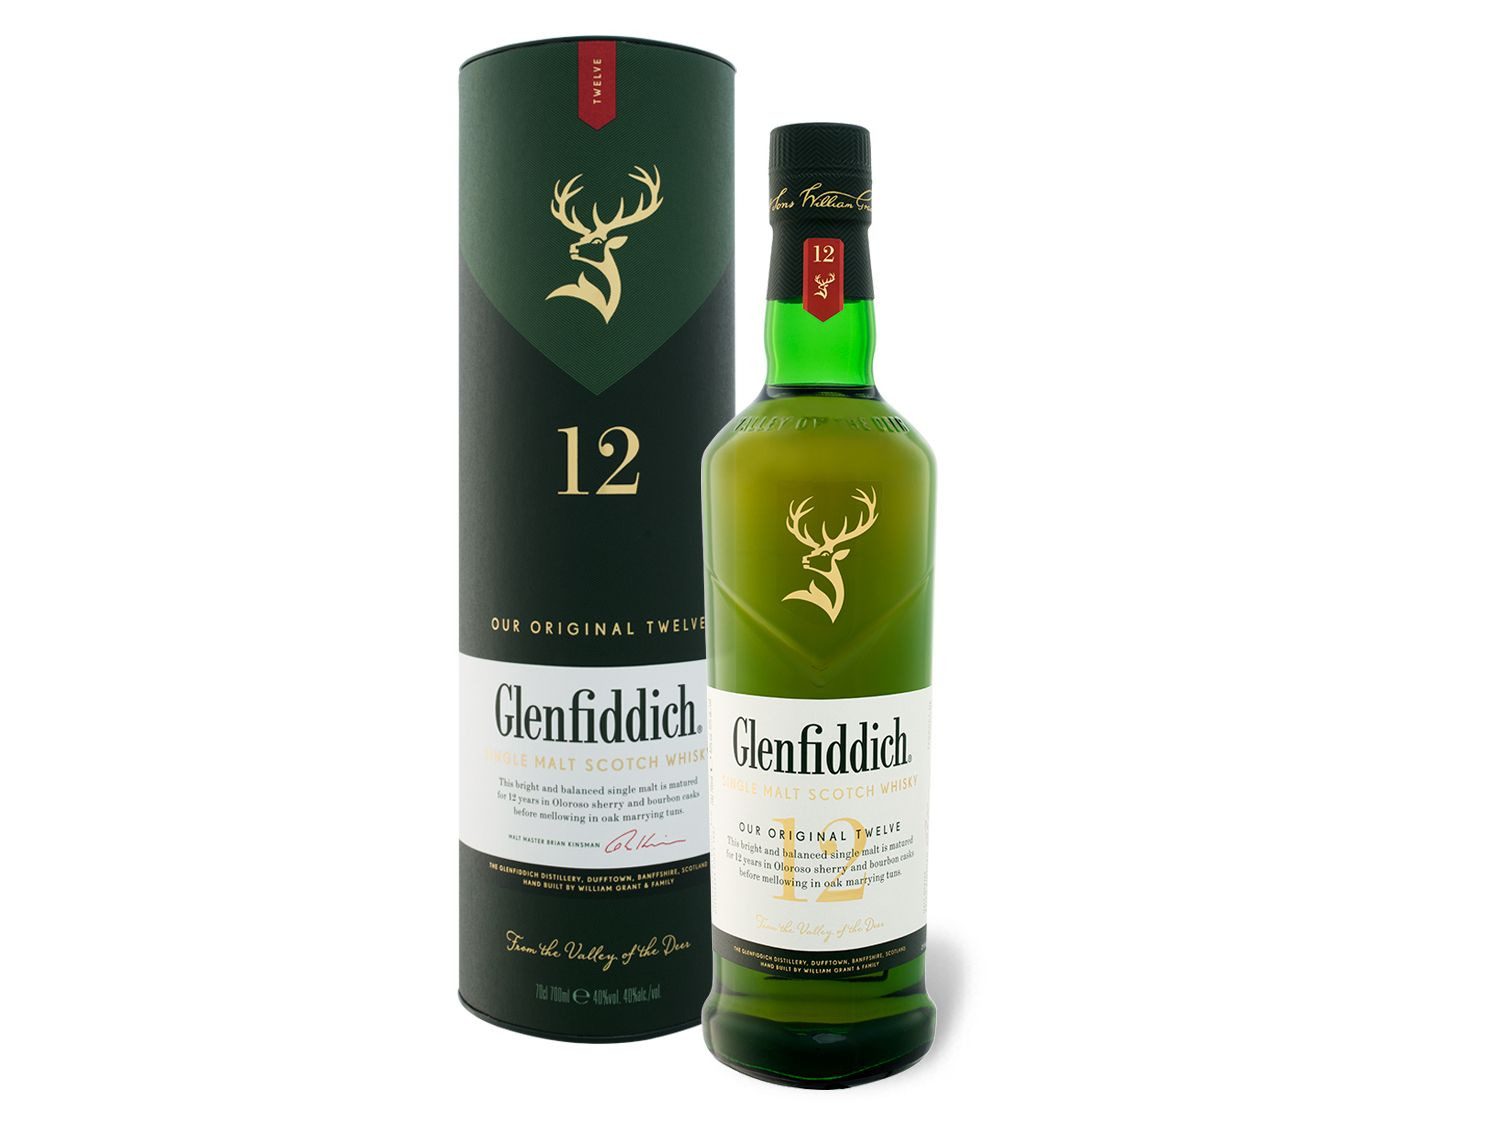 Glenfiddich Signature Single Scotch Whis… Speyside Malt